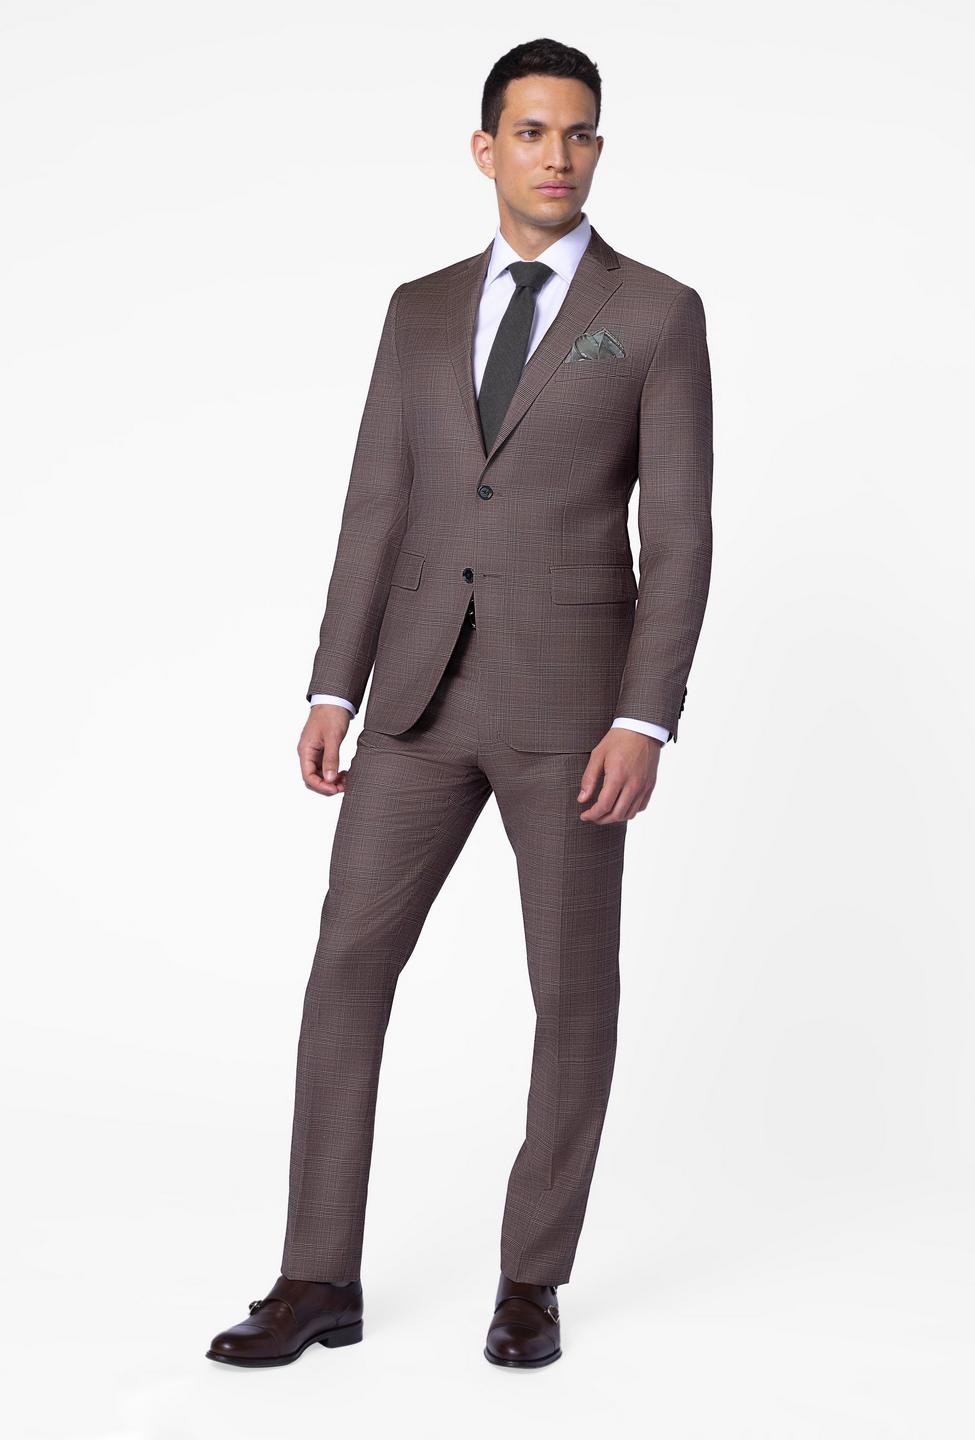 Jordanhill Glen Check Warm Gray Suit